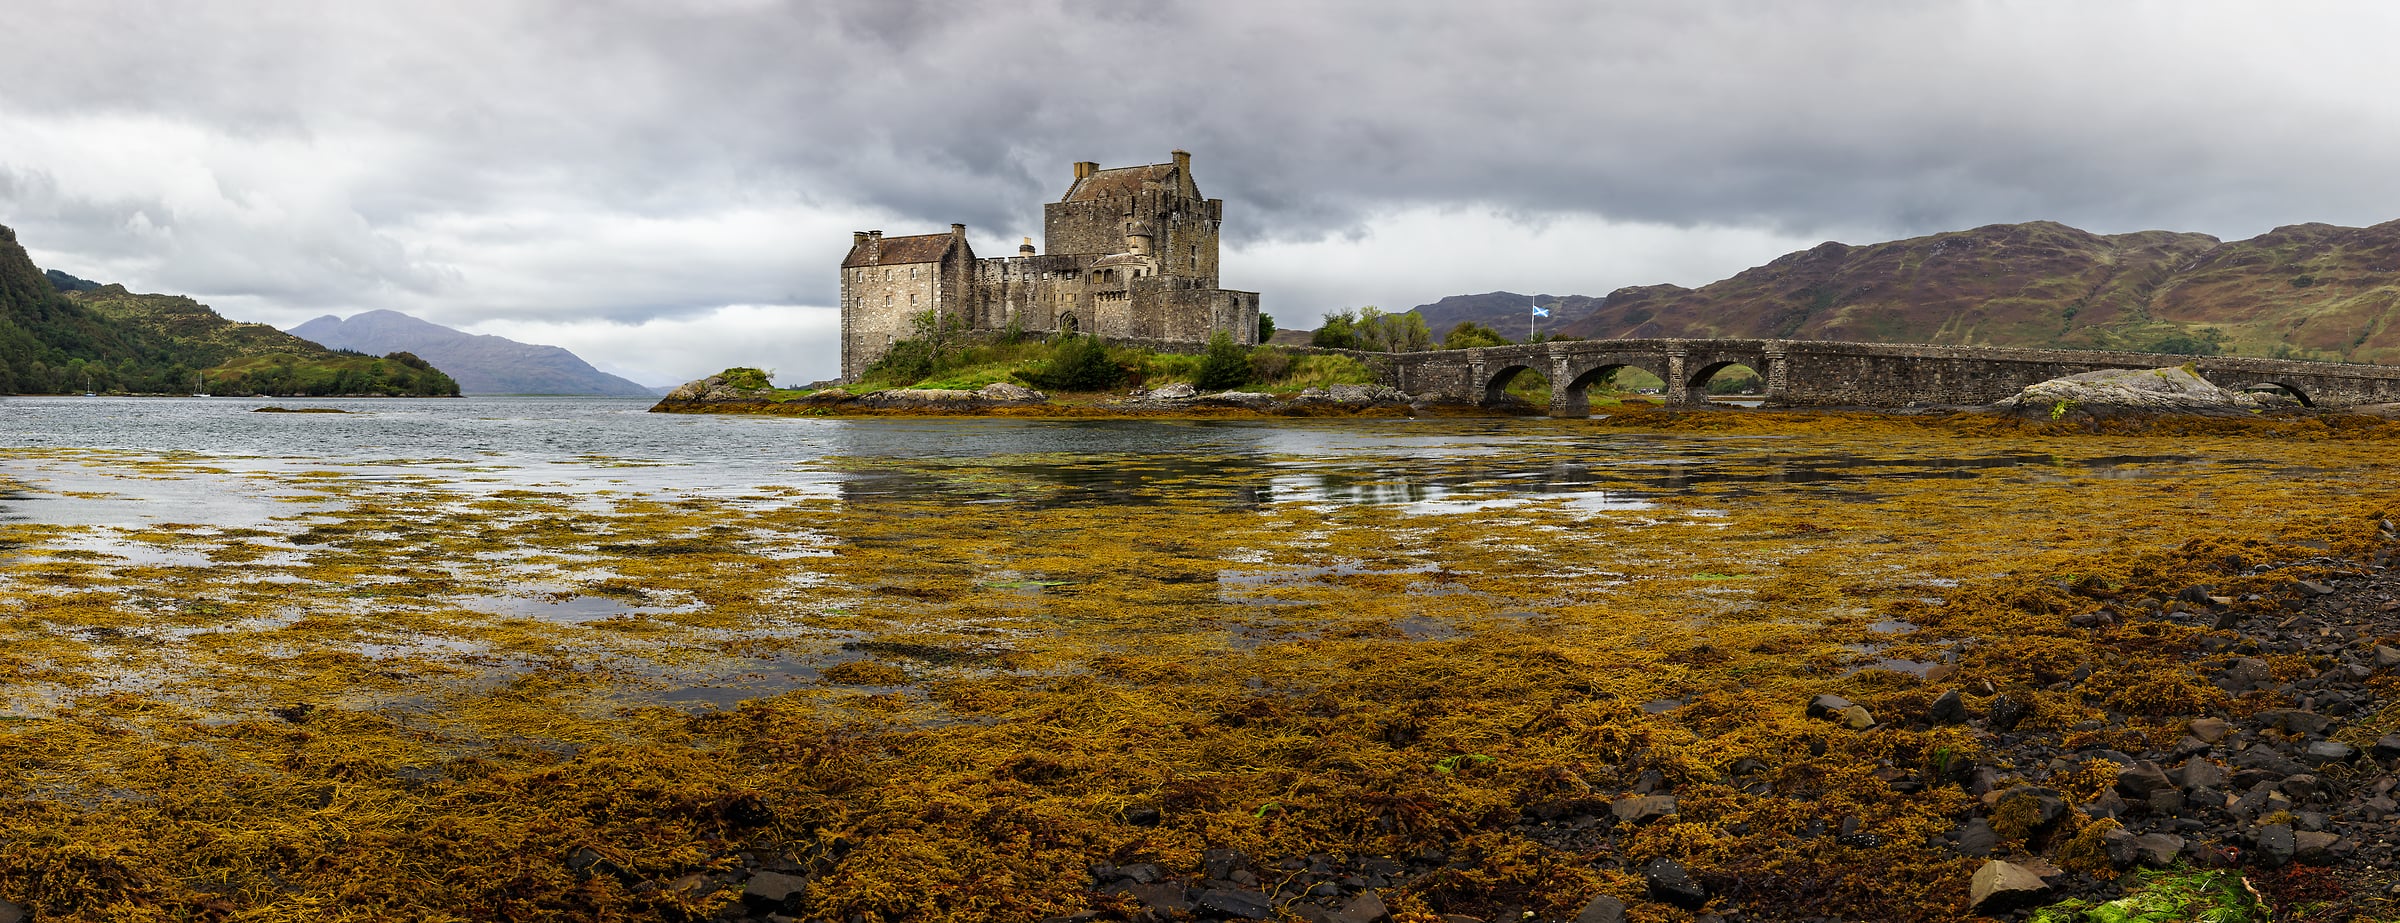 2,036 megapixels! A very high resolution, large-format VAST photo print of a Scotland landscape with a castle; photograph created by Scott Dimond at Eilean Donan Castle, Dornie, Kyle of Lochalsh, United Kingdon